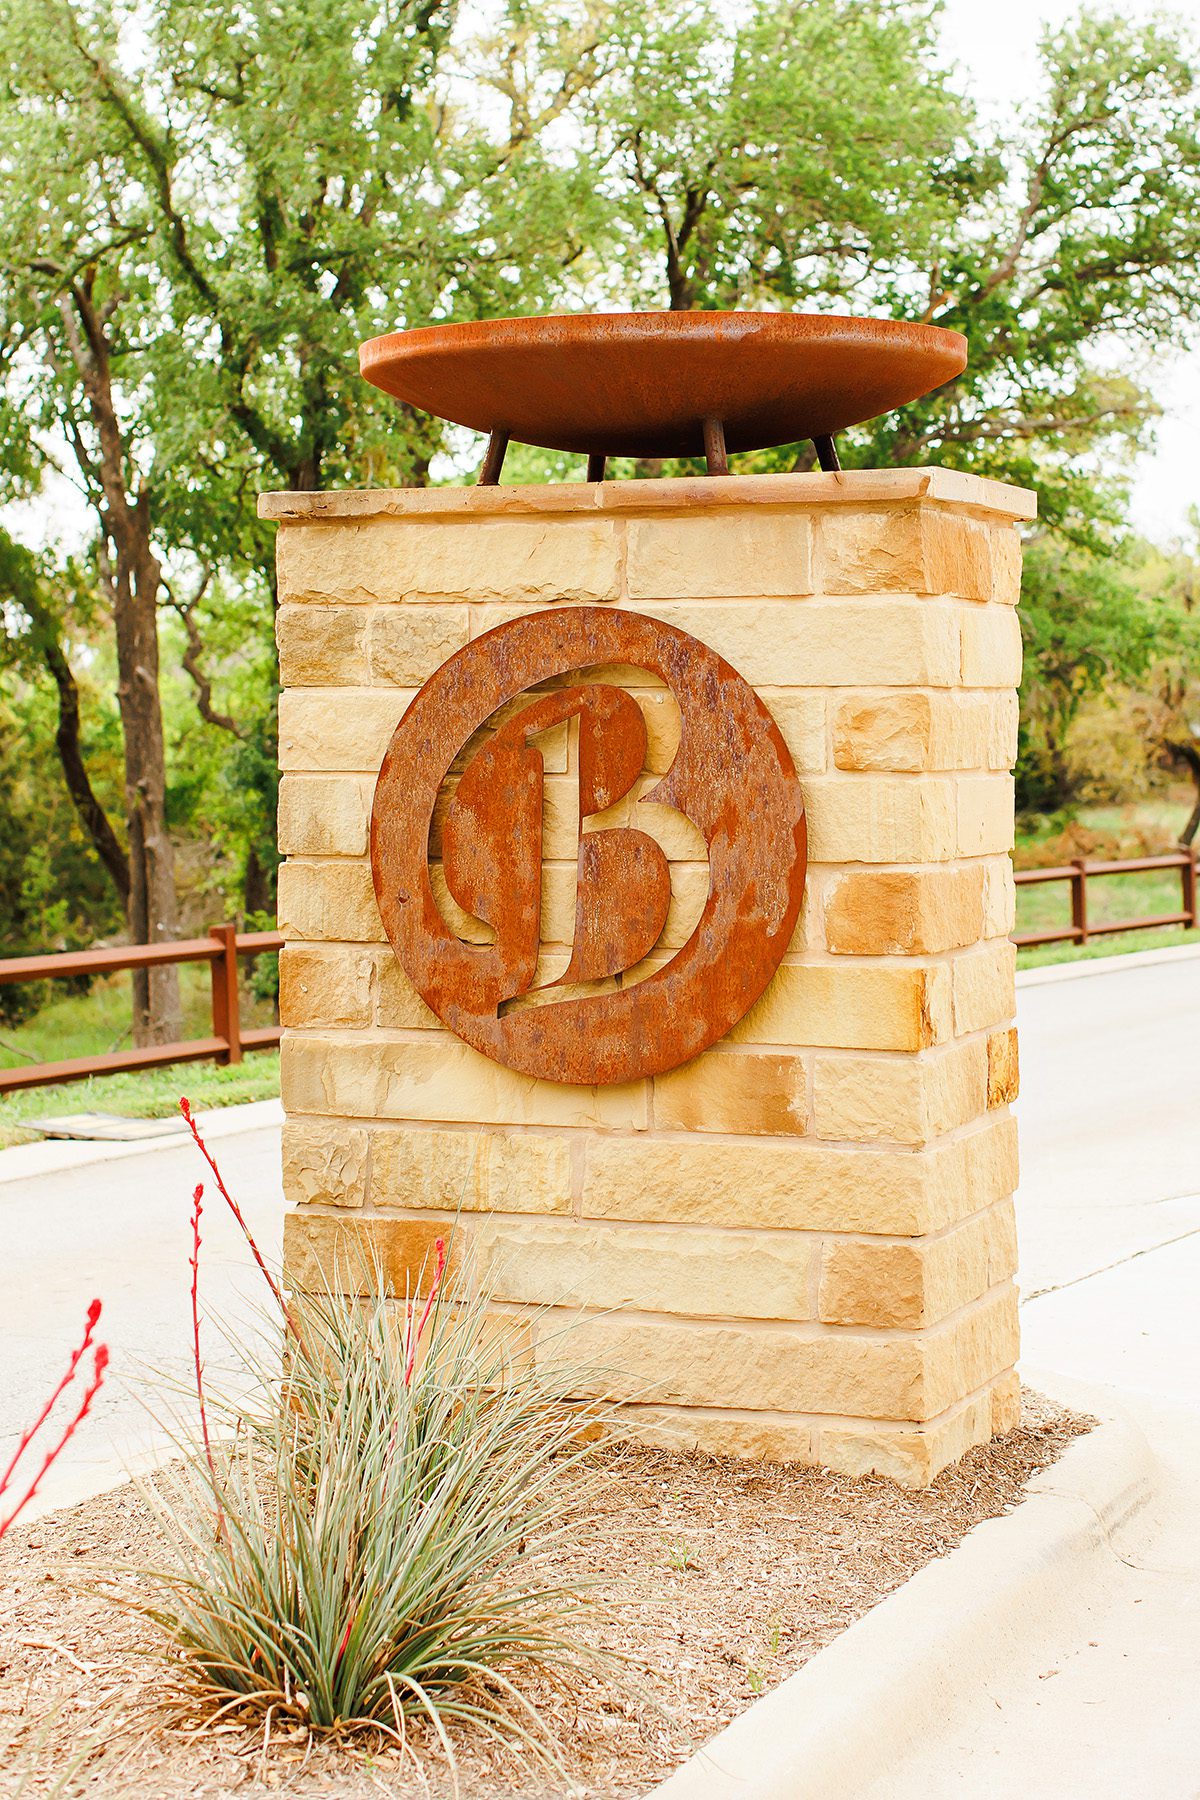 Bunker Ranch Dripping Springs, Texas neighborhood entrance gate